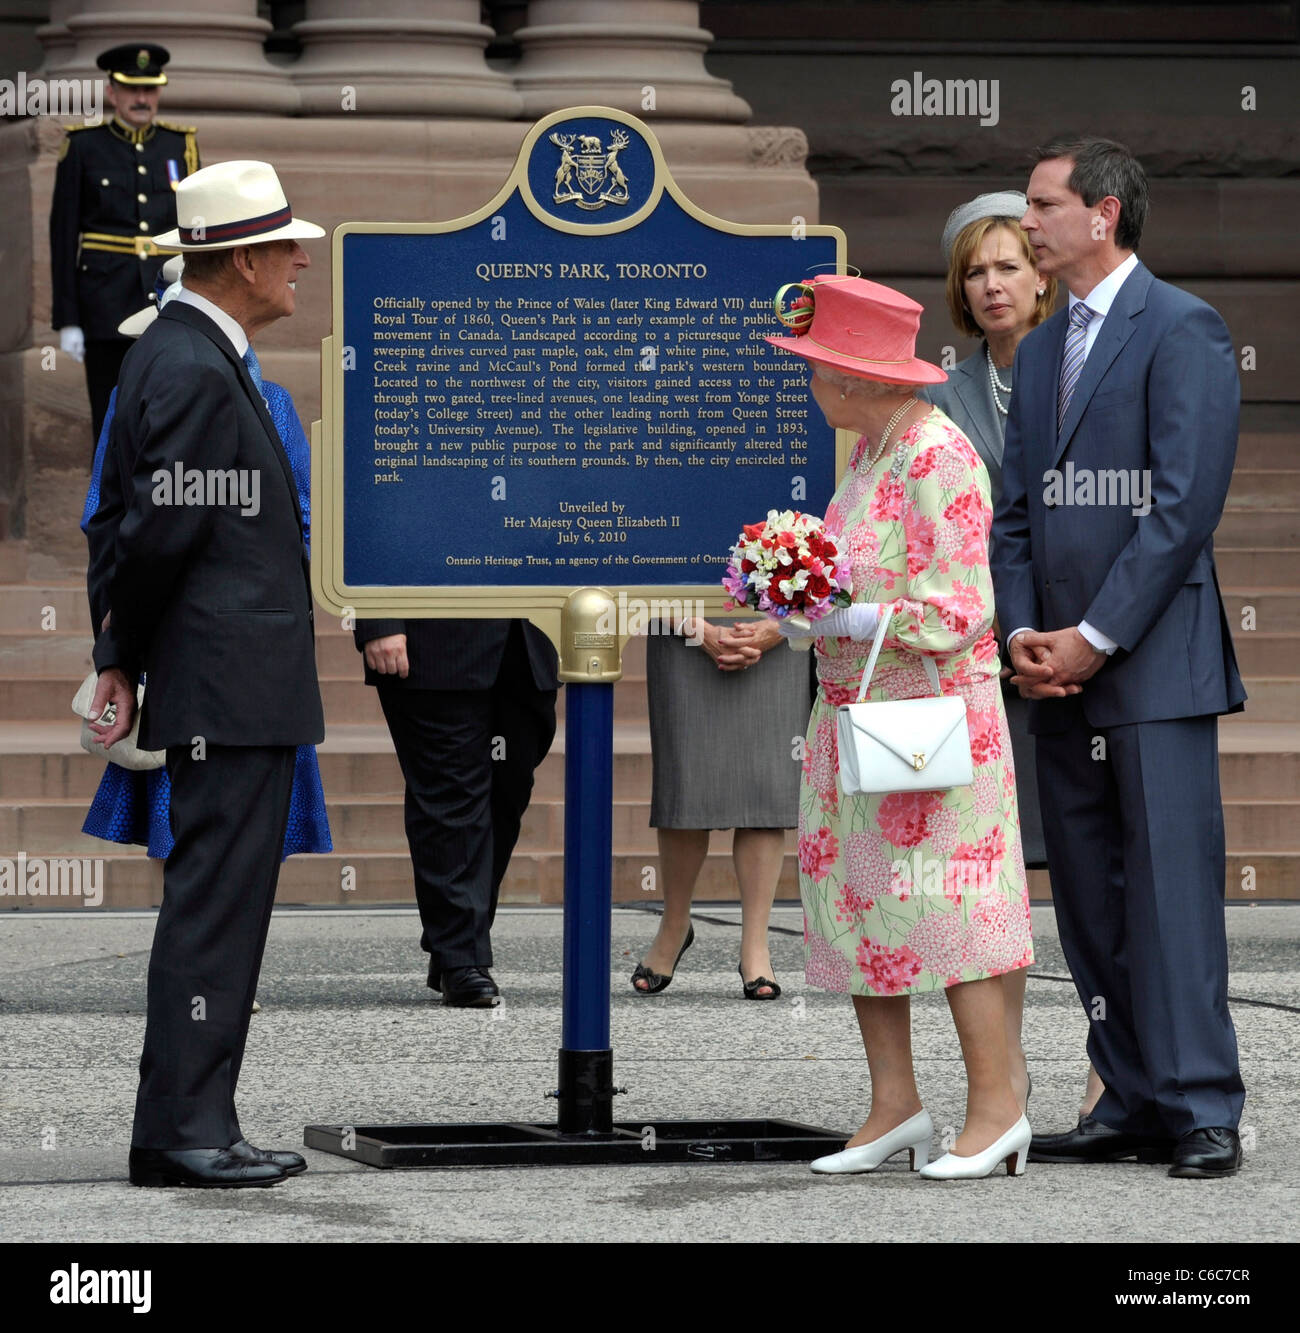 Prince Philip, Duke of Edinburgh, Queen Elizabeth II and Ontario Premier Dalton McGuinty Queen Elizabeth II unveiling a Stock Photo